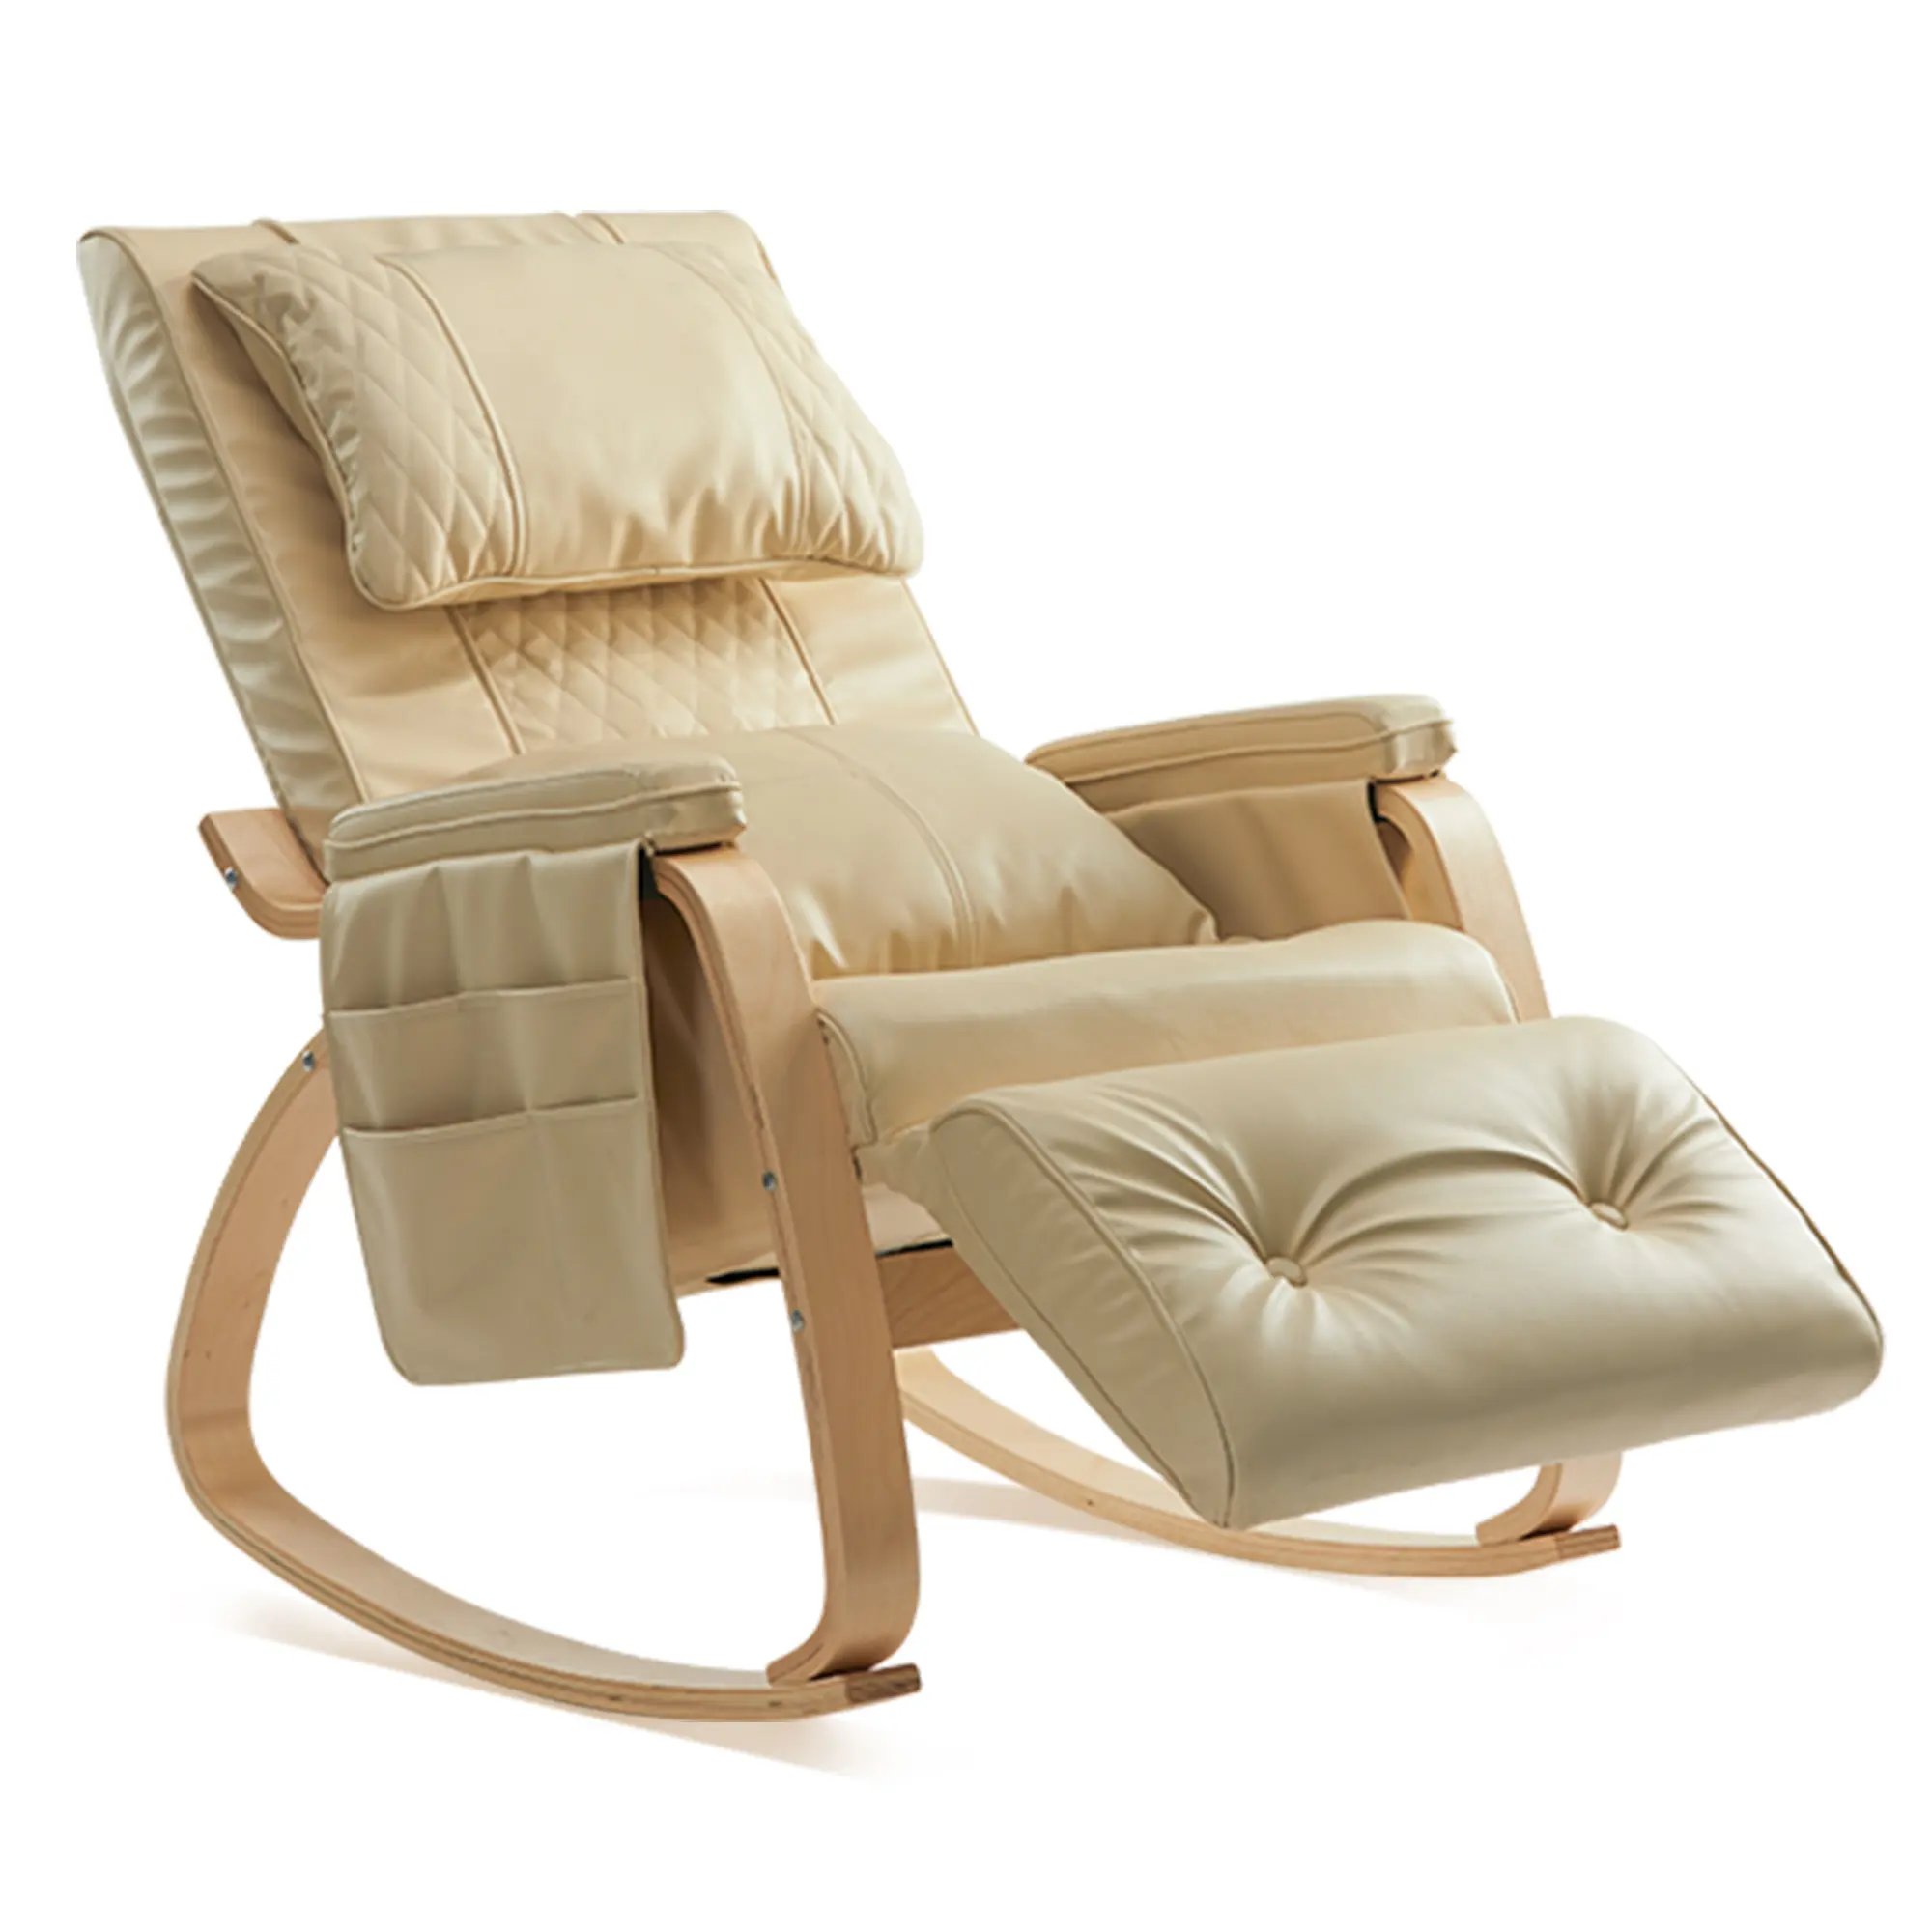 Harga pabrik gaya Modern penuh tubuh memijat relaksasi ruang tamu kamar tidur kursi goyang kayu